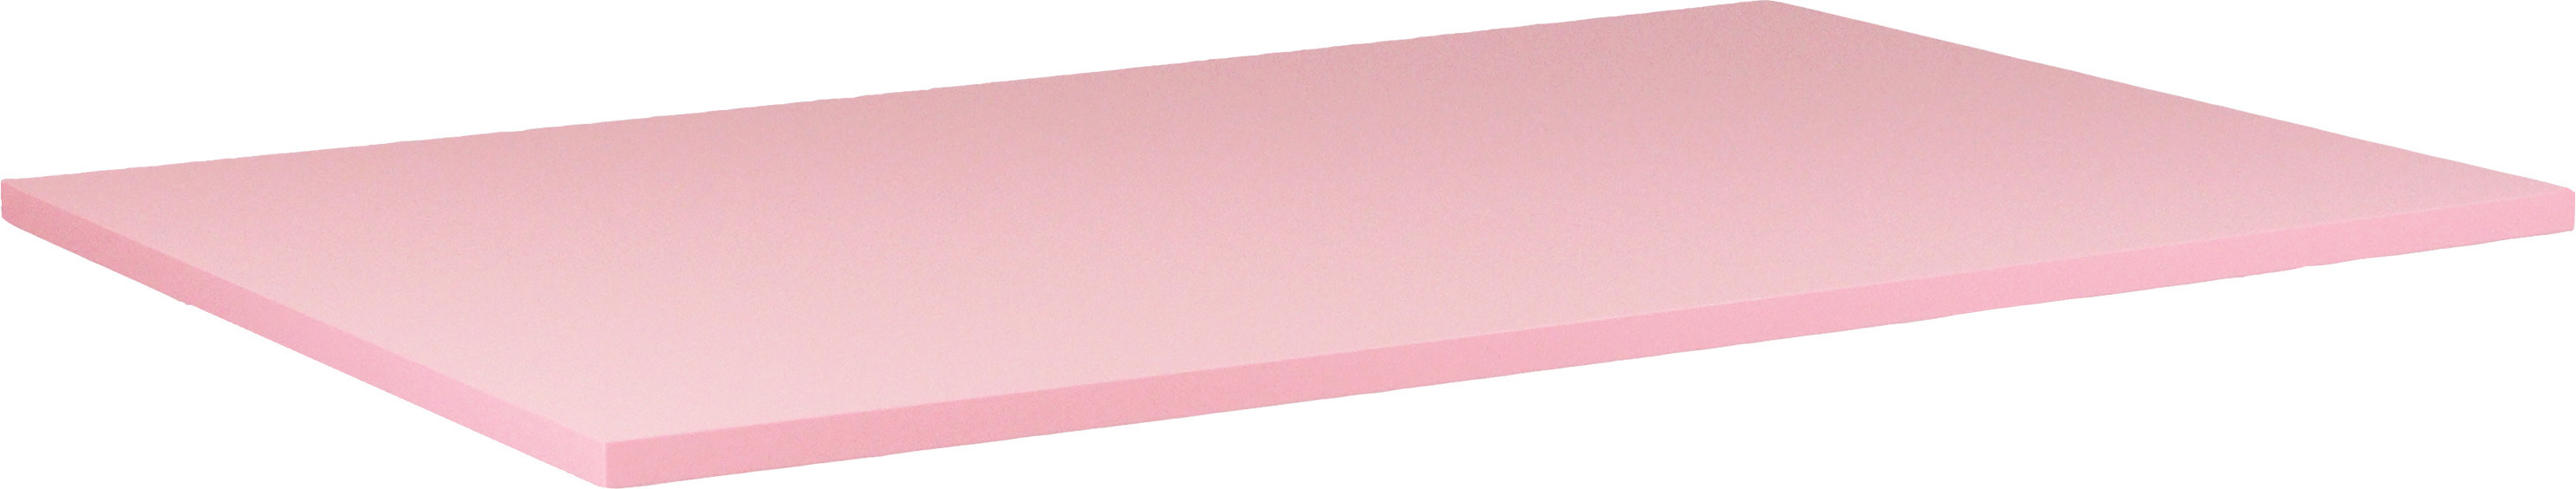 Elfen Ergodesk -pöytälevy, 140 x 75 cm, pinkki